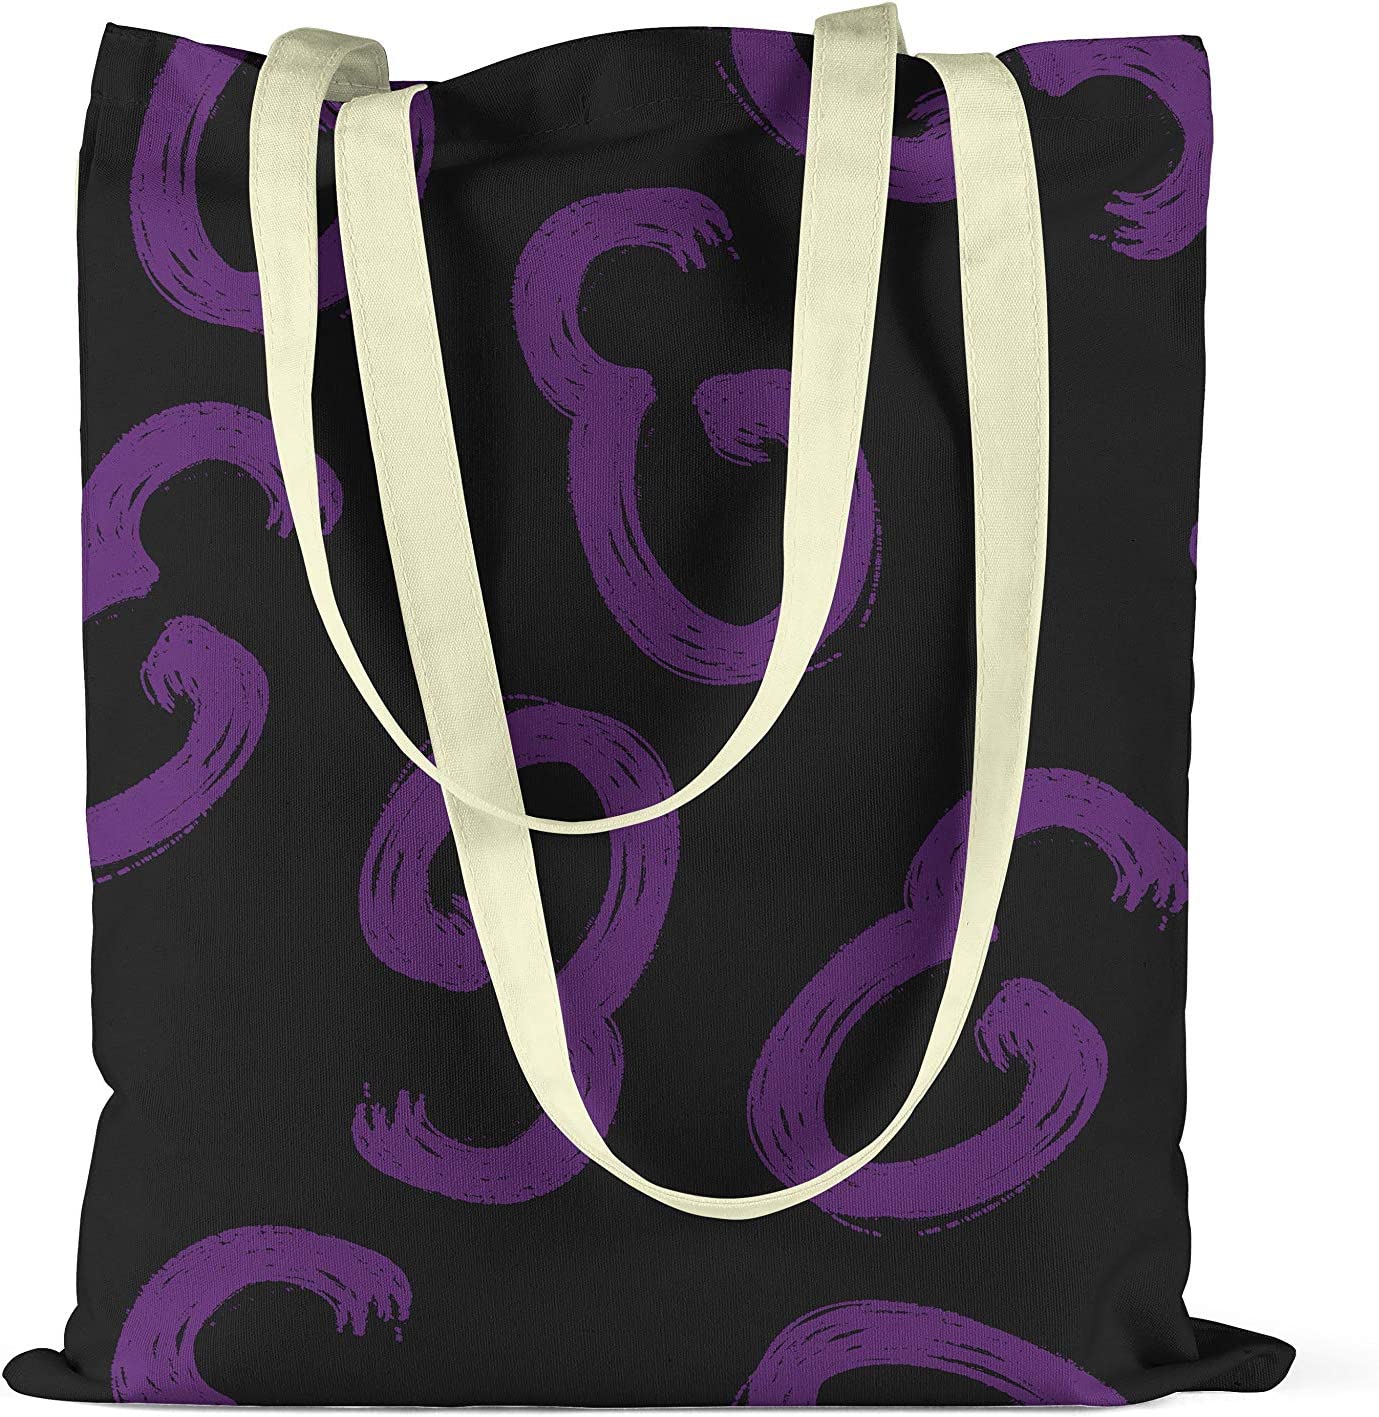 Bonamaison Purple Swirl Design Printed Black Tote Bag 34 x 40cm RRP £5.99 CLEARANCE XL £3.99